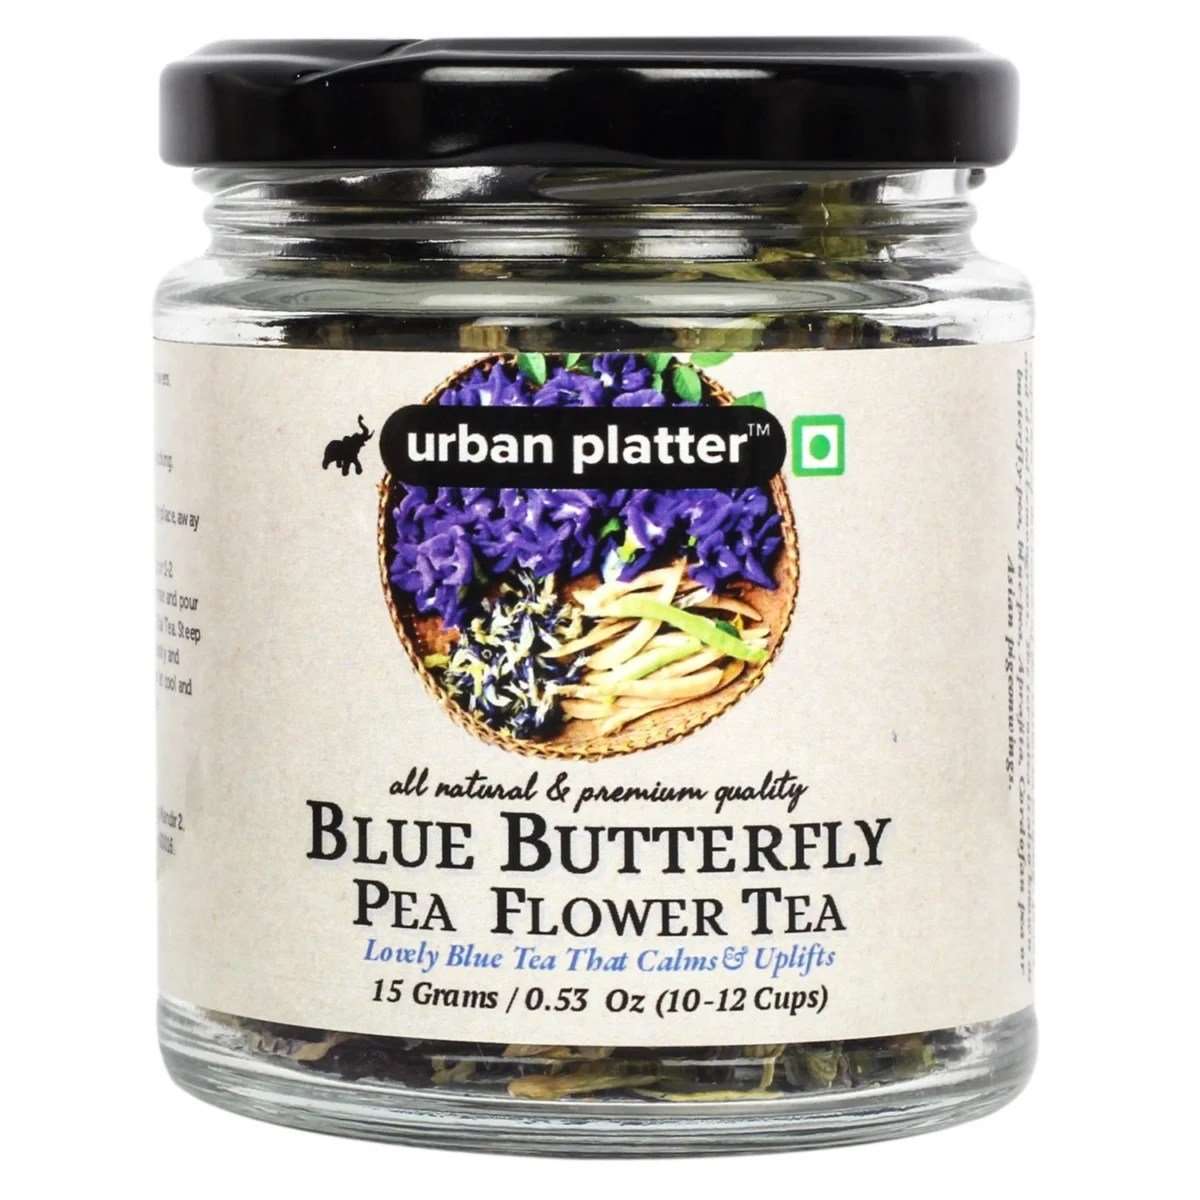 Urban Platter Blue Butterfly Pea Flower Tea, 15g / 0.53oz ...